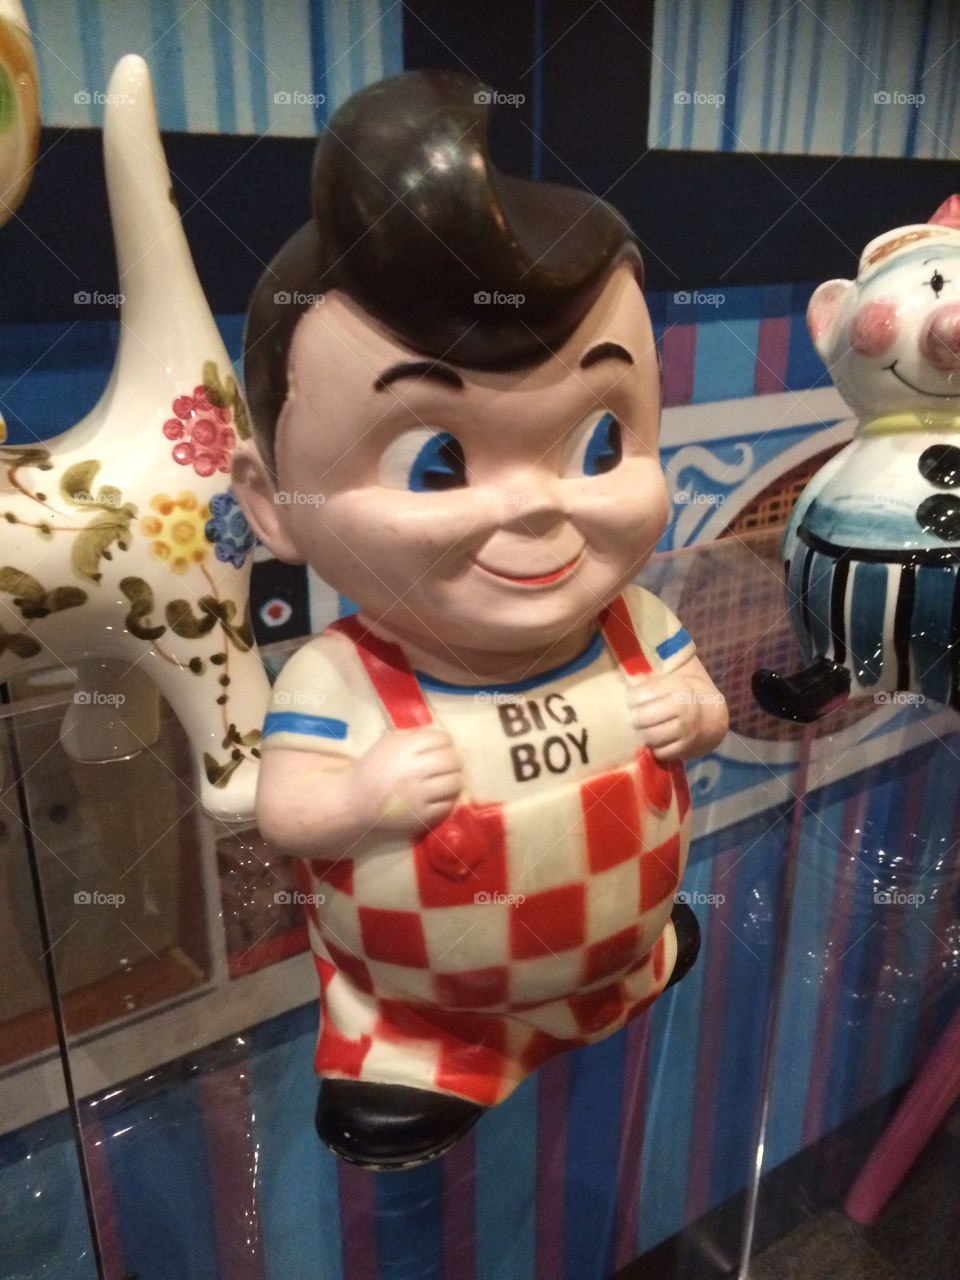 Big Boy figurine, Toys of the 50s, 60s, and 70s Exhibit, Colorado History Museum, Denver, Colorado
